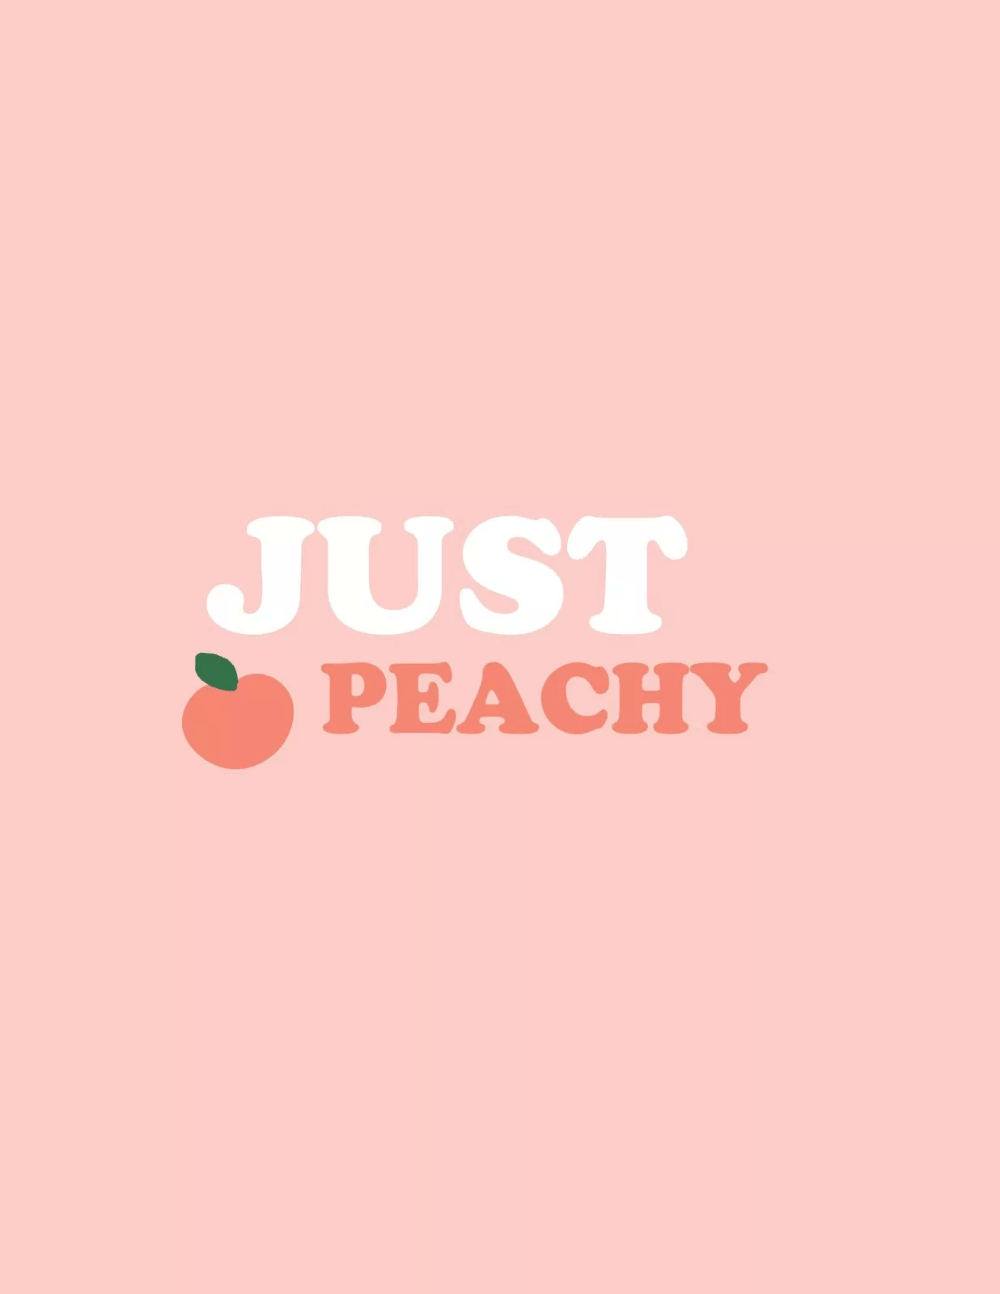 Just peachy logo design - Princess Peach